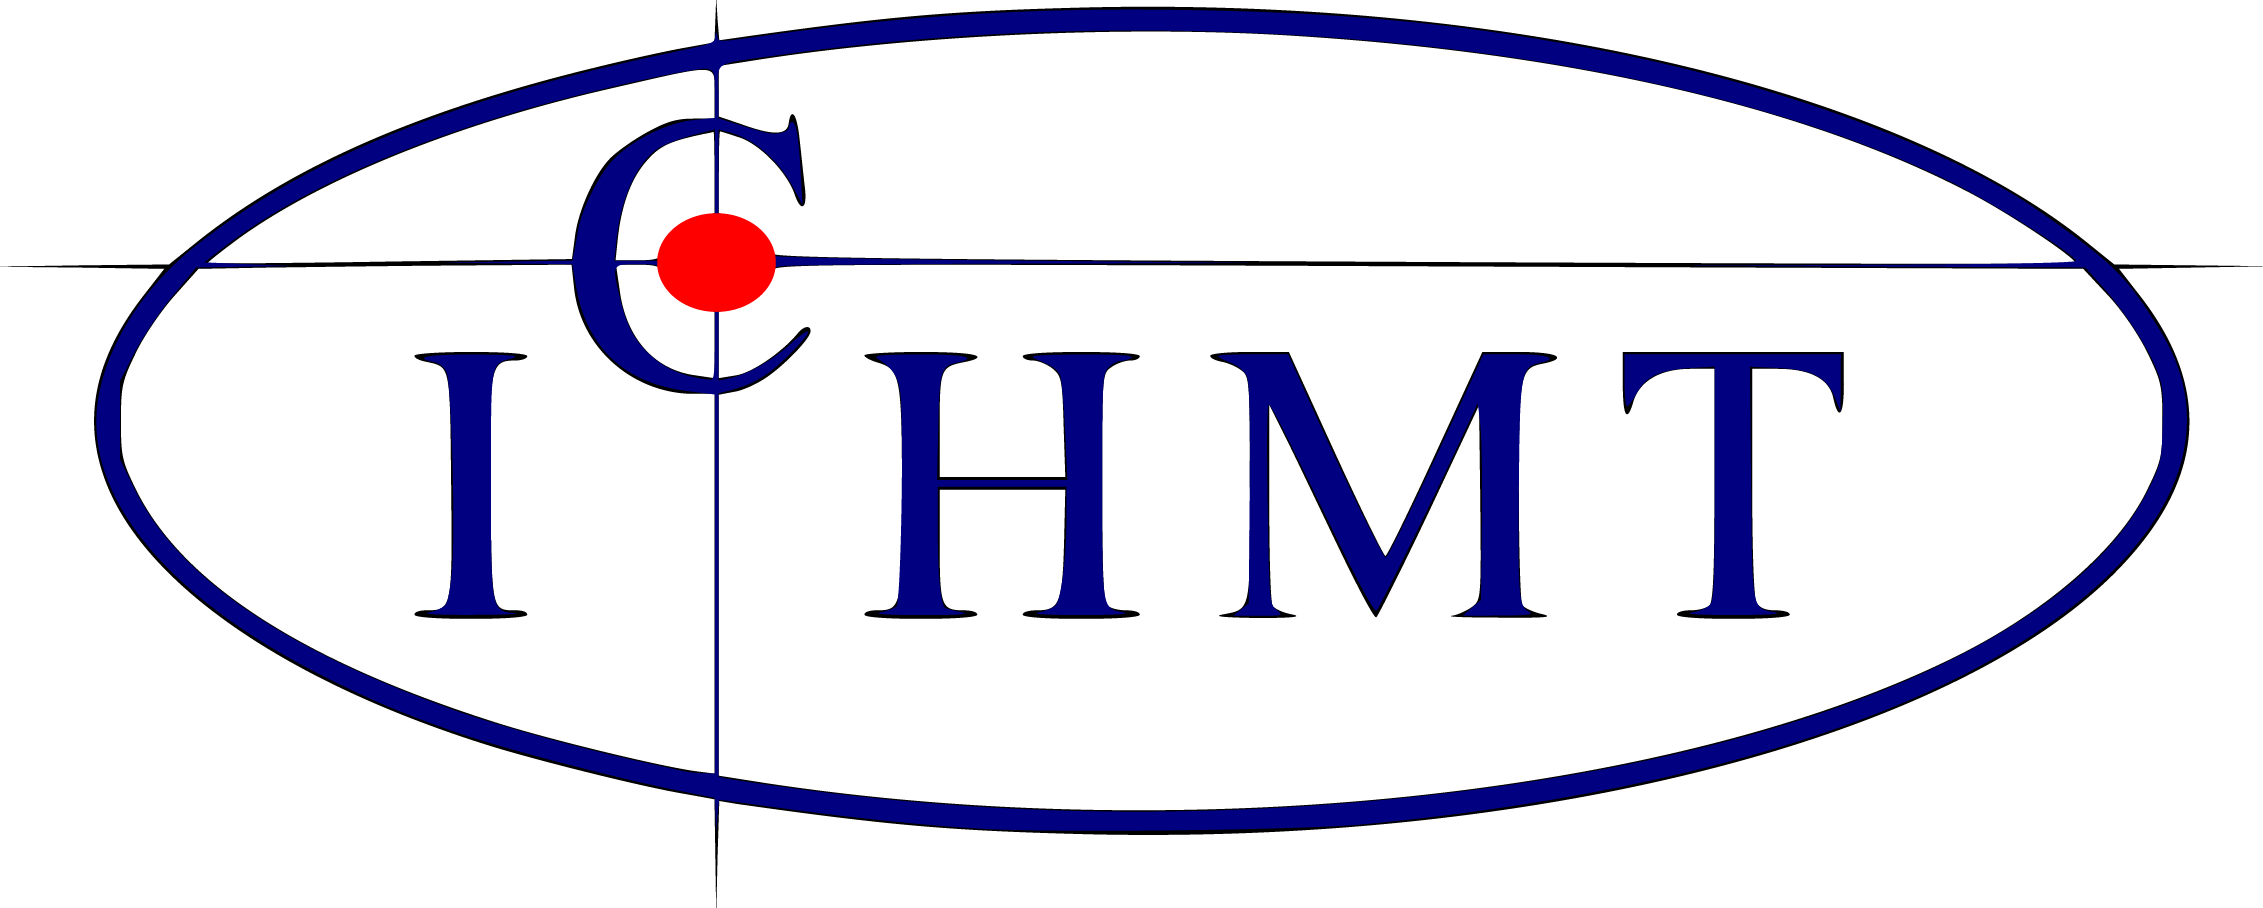 images/ichmt logo.png